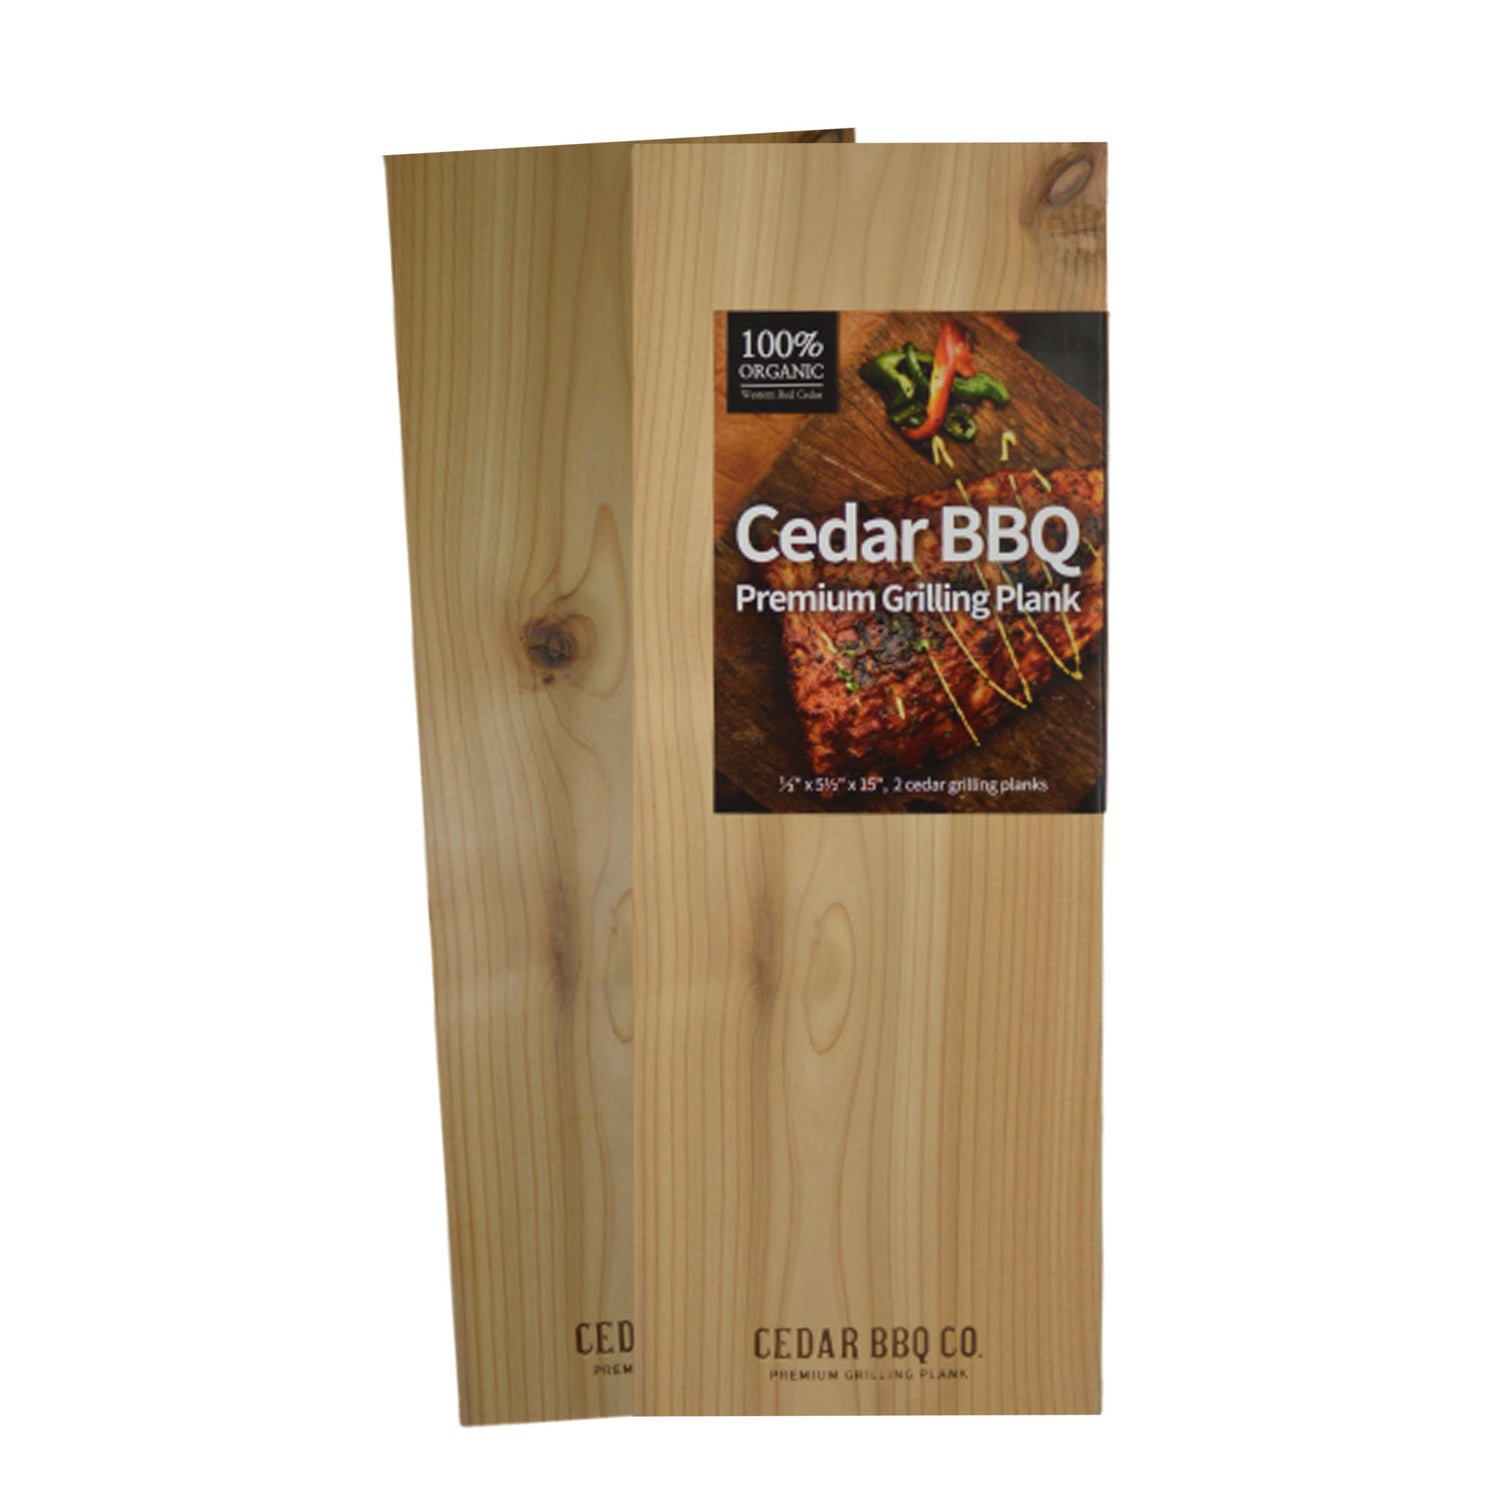 Cedar BBQ Grilling Plank